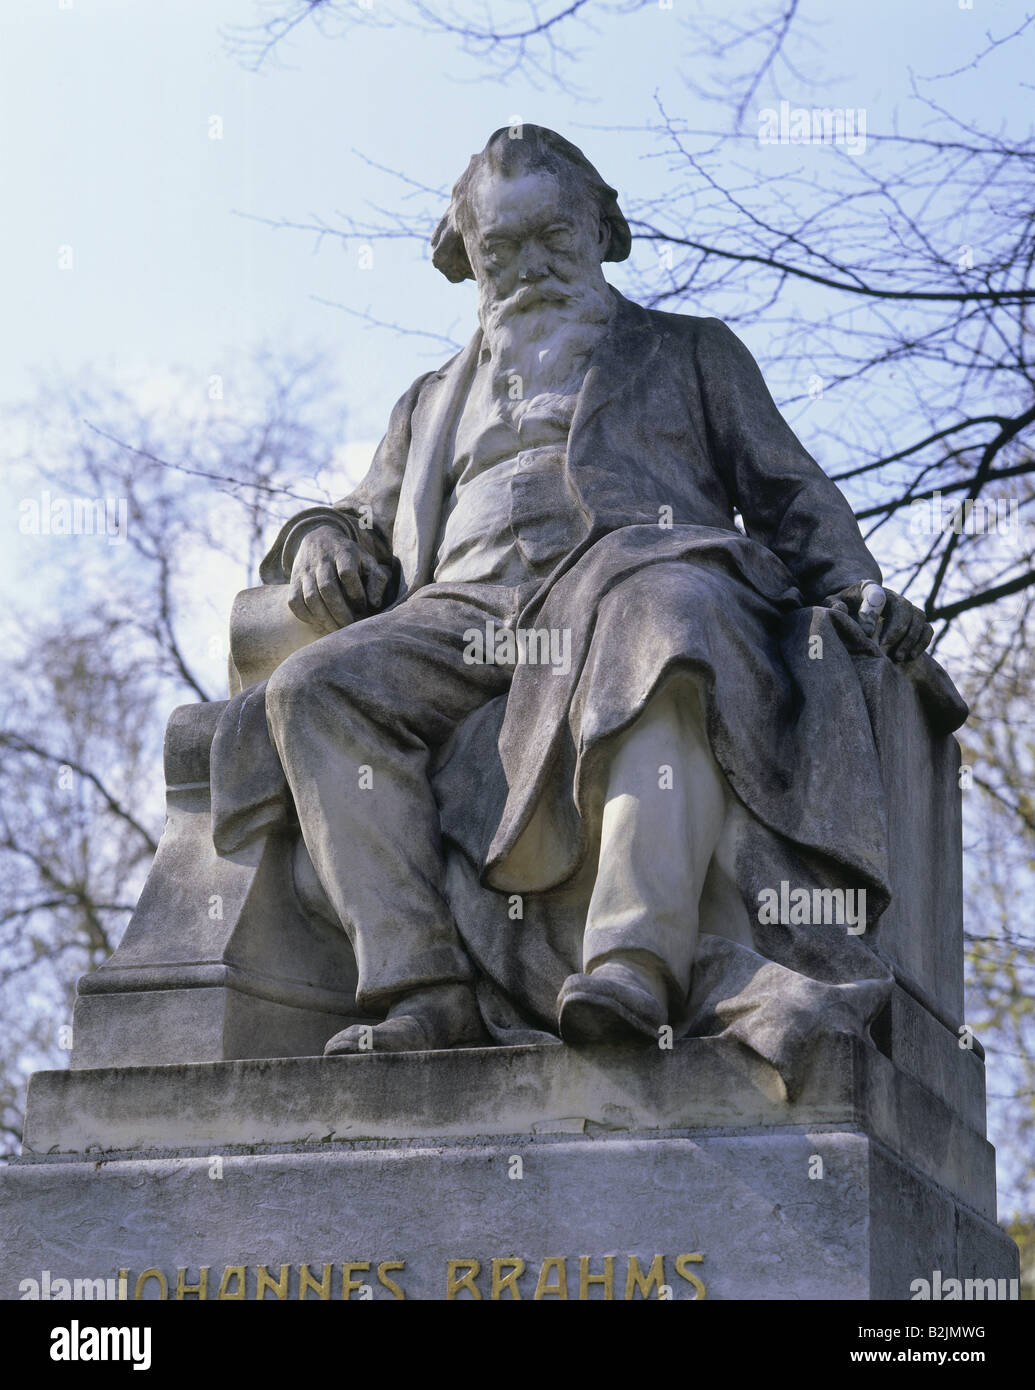 Brahms, Johannes, 7.5.1833 - 3.4.1897, German composer, memorial, statue, built: circa 1908, sculptor: Rudolf Weyr, Resselpark, Vienna, Austria, Stock Photo